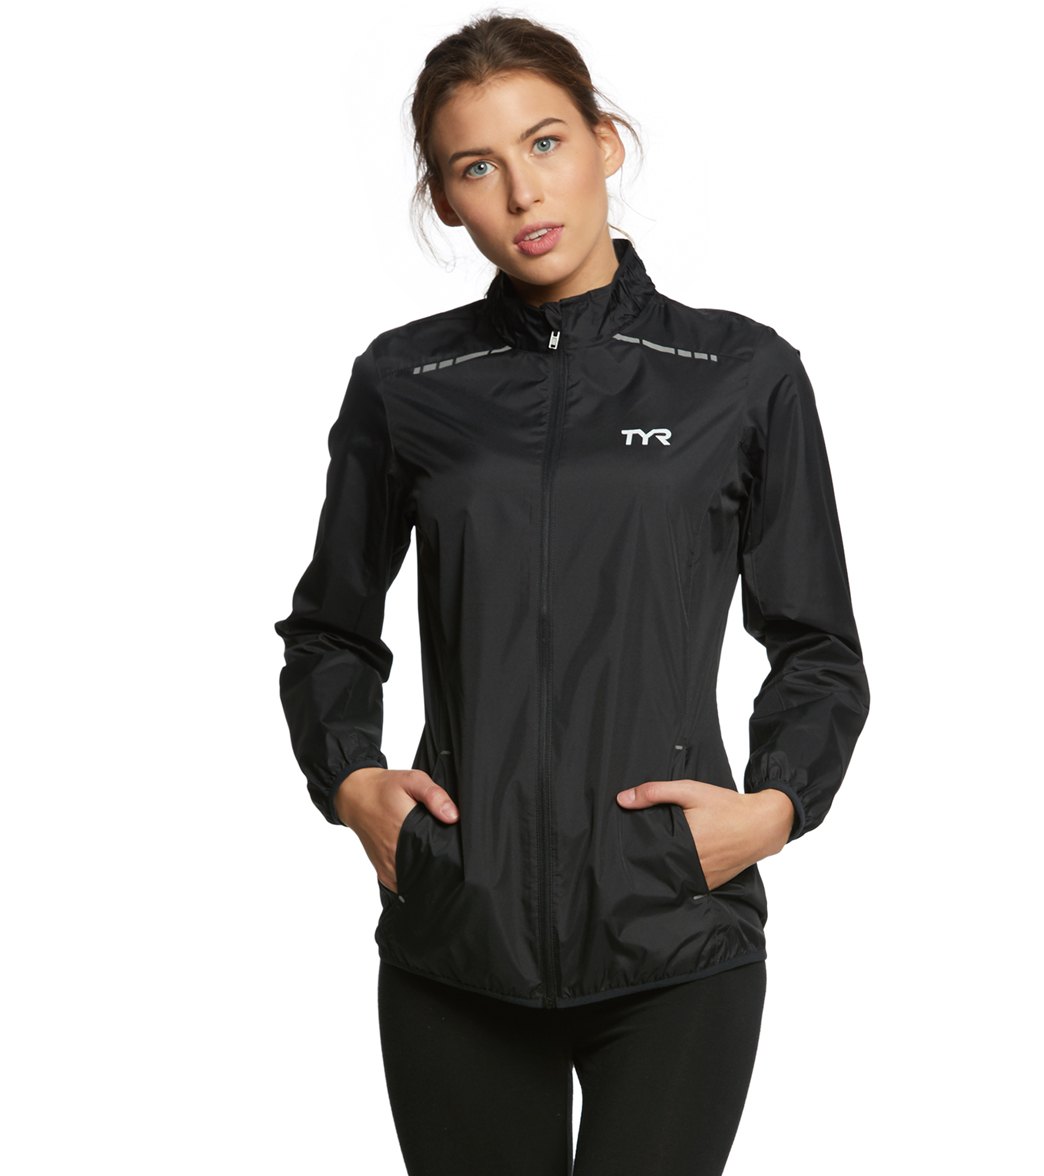 TYR Women's Alliance Windbreaker Jacket - Black Large Polyester - Swimoutlet.com